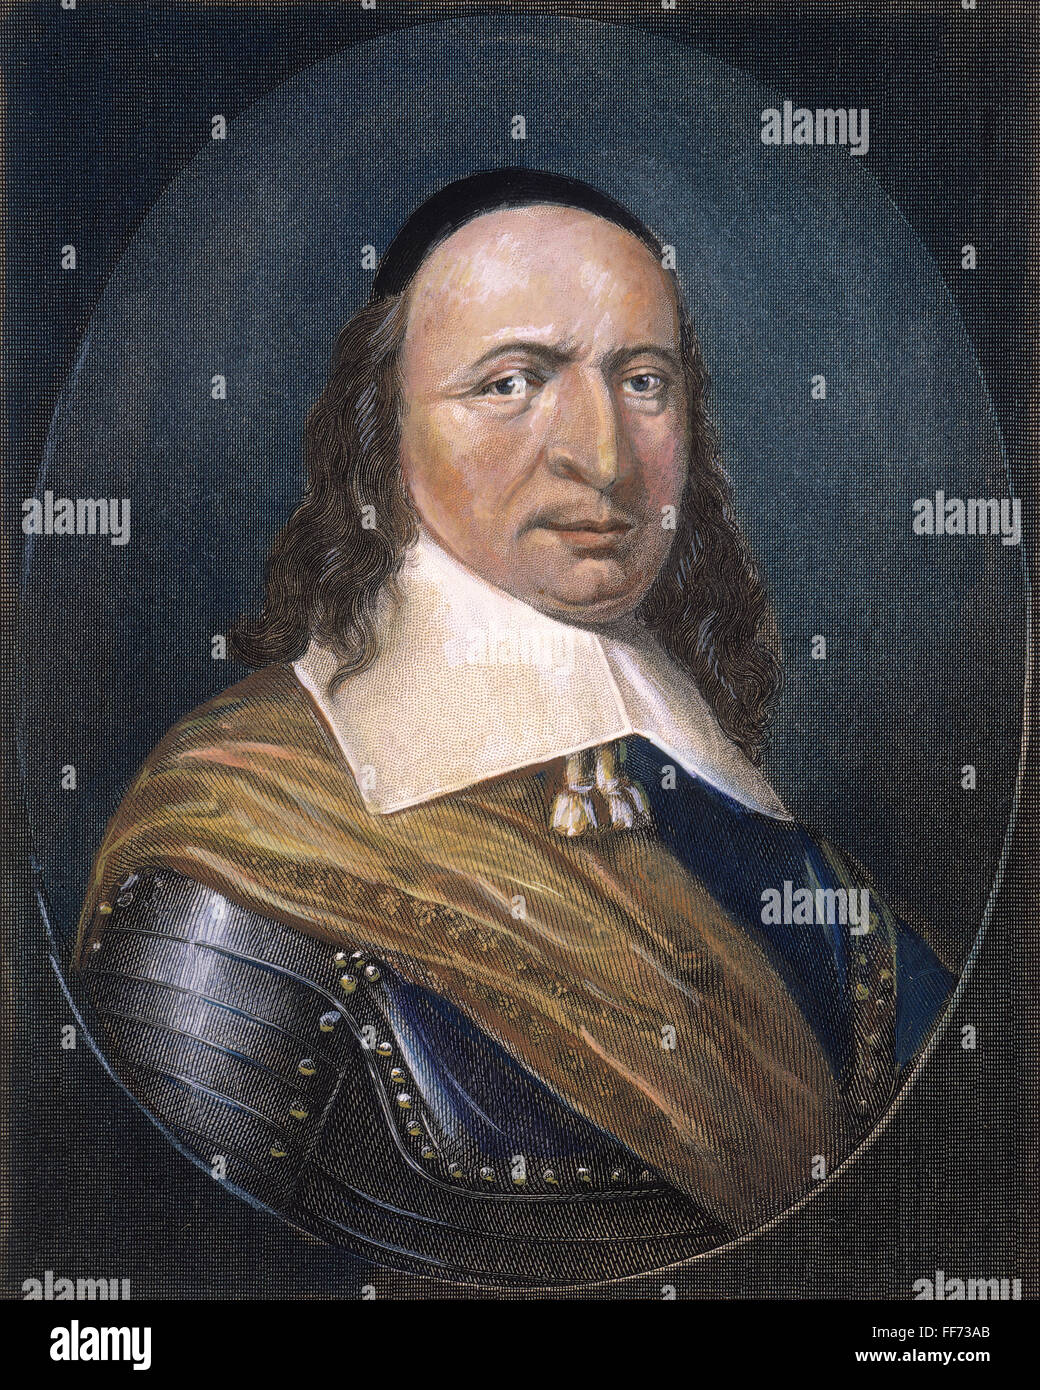 PETER STUYVESANT /n(1592-1672). Niederländische Administrator in Amerika. Farbe, Gravur, 19. Jahrhundert. Stockfoto